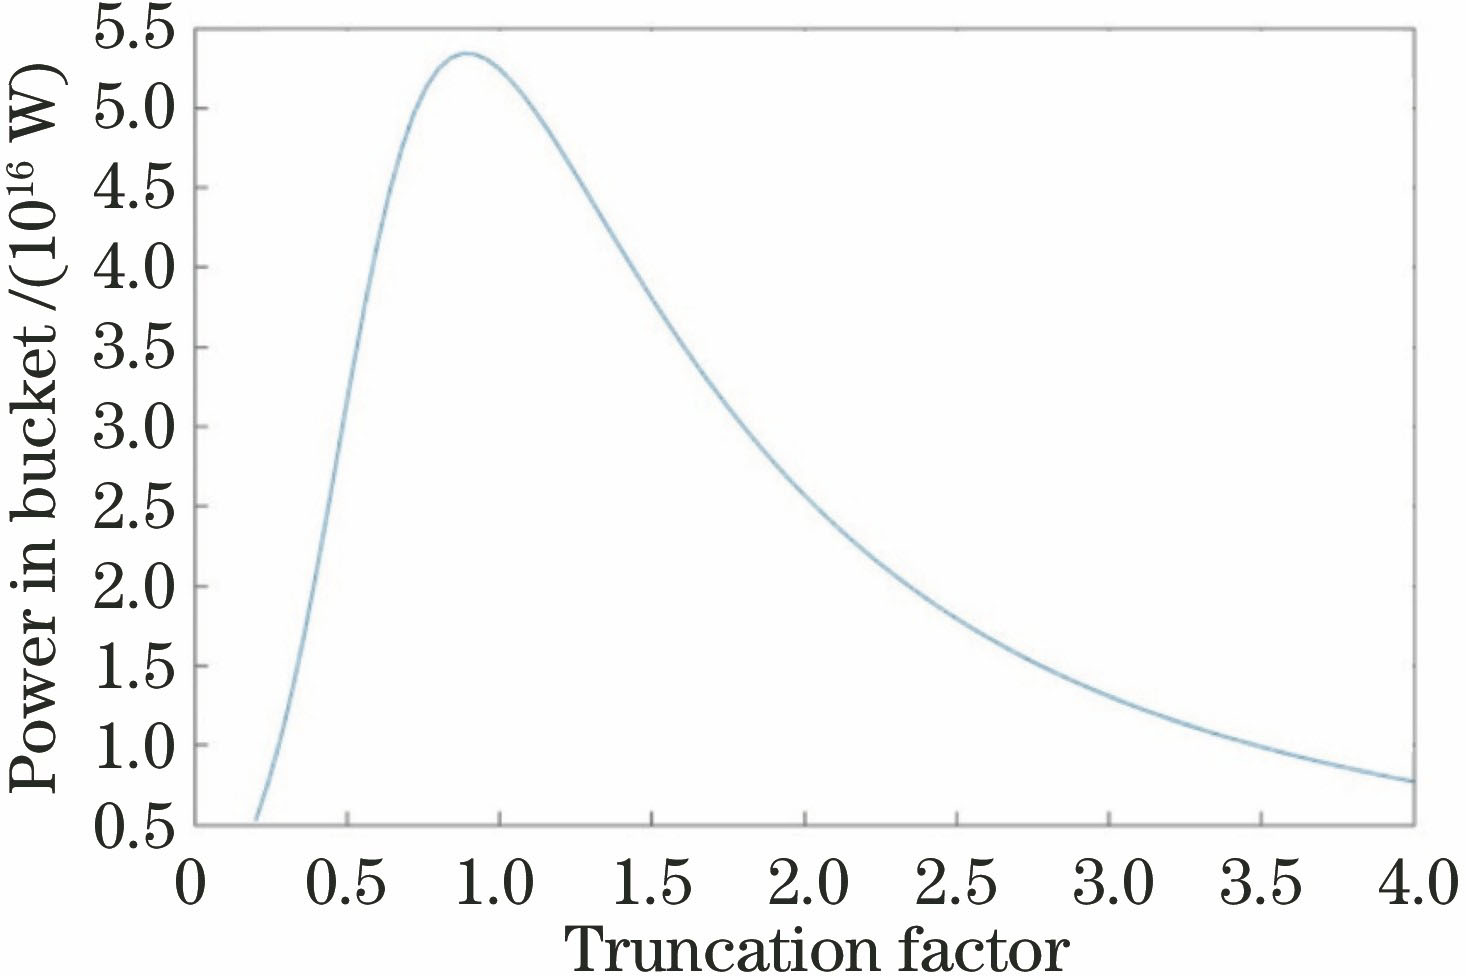 Influence of truncation factor on power in bucket